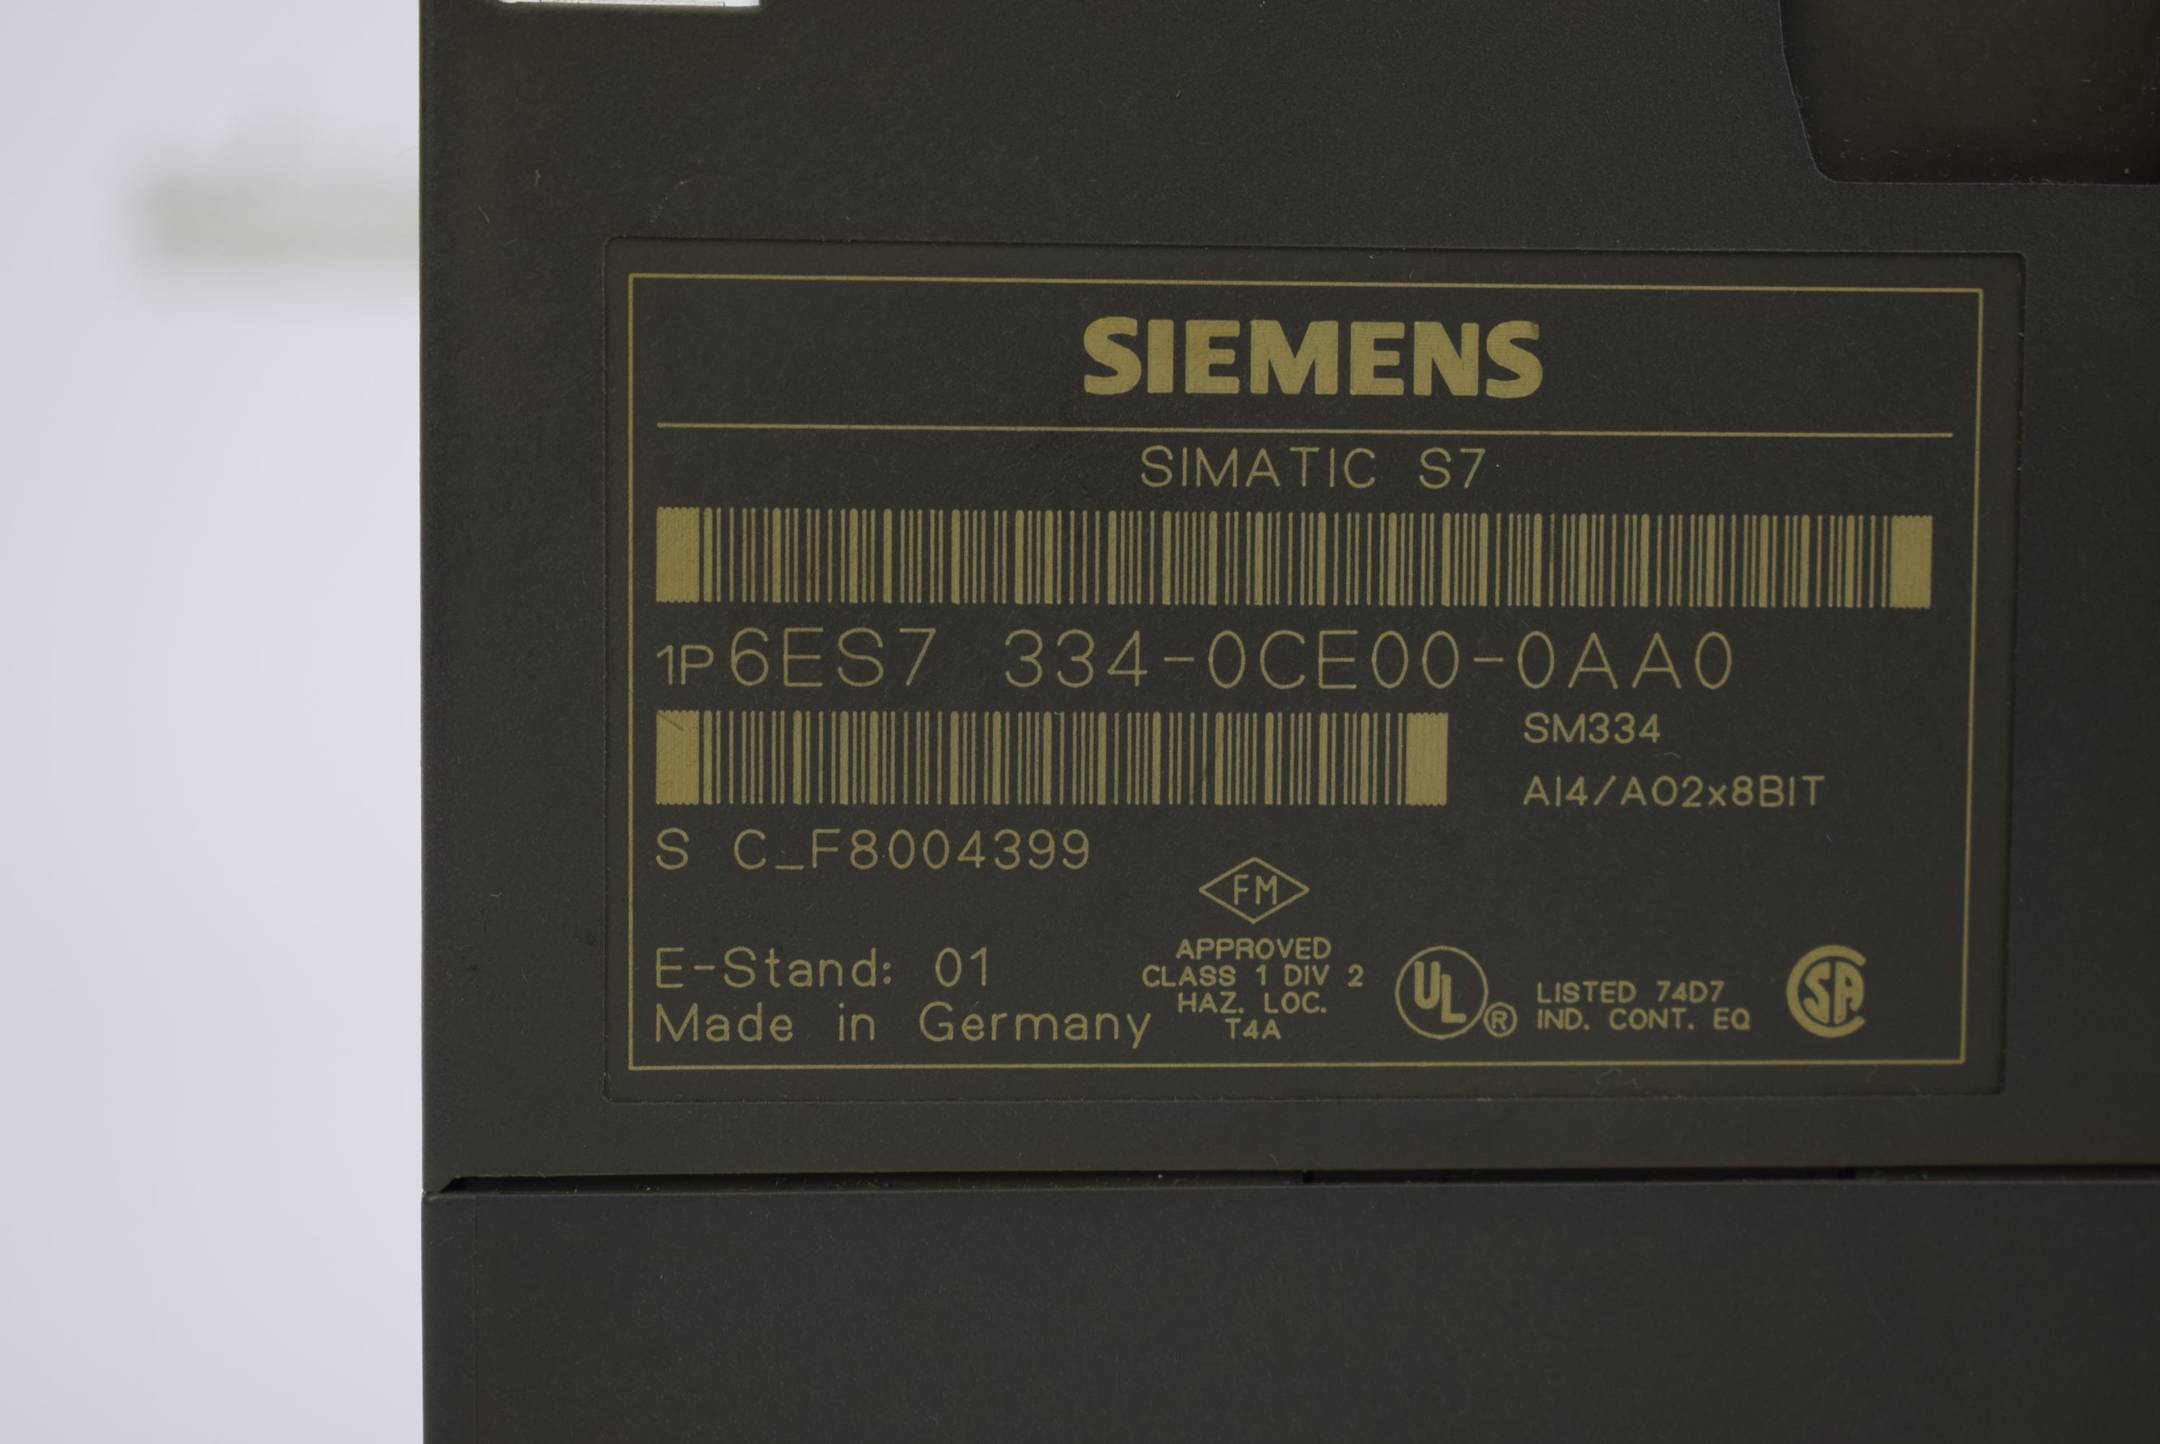 Siemens simatic S7-300 SM334 6ES7 334-0CE00-0AA0 ( 6ES7334-0CE00-0AA0 ) E1